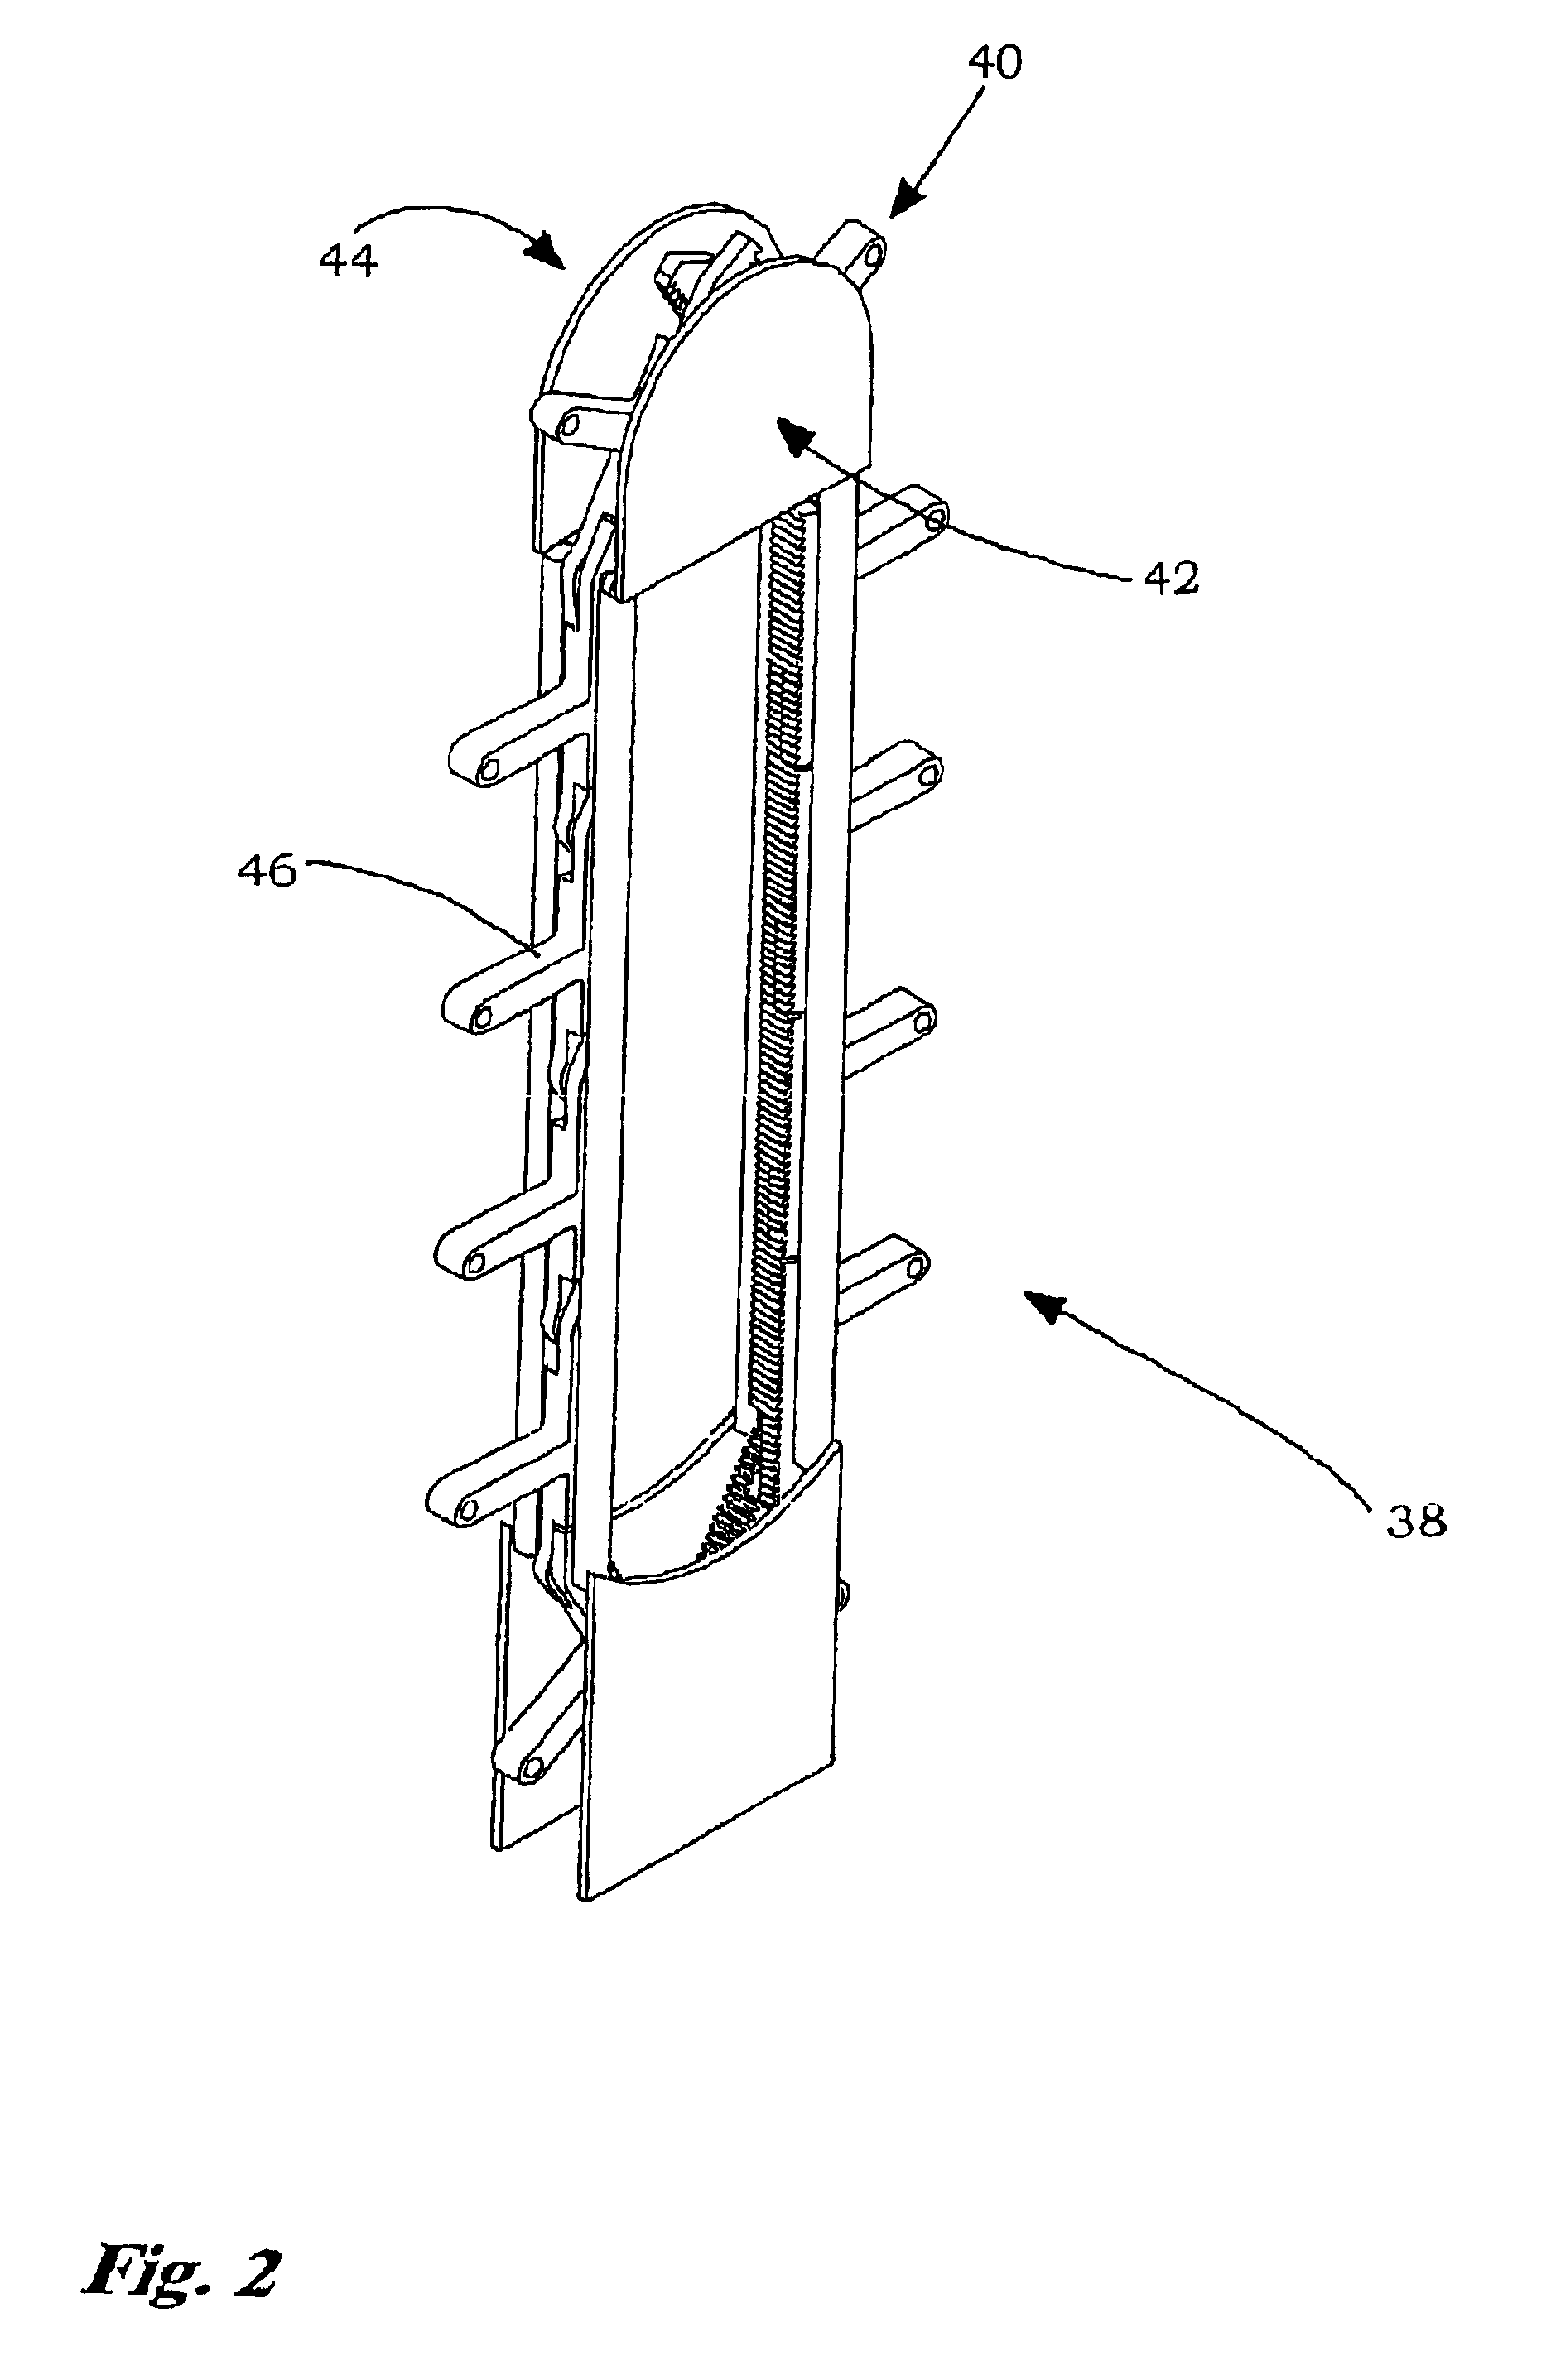 Moving crank mechanism